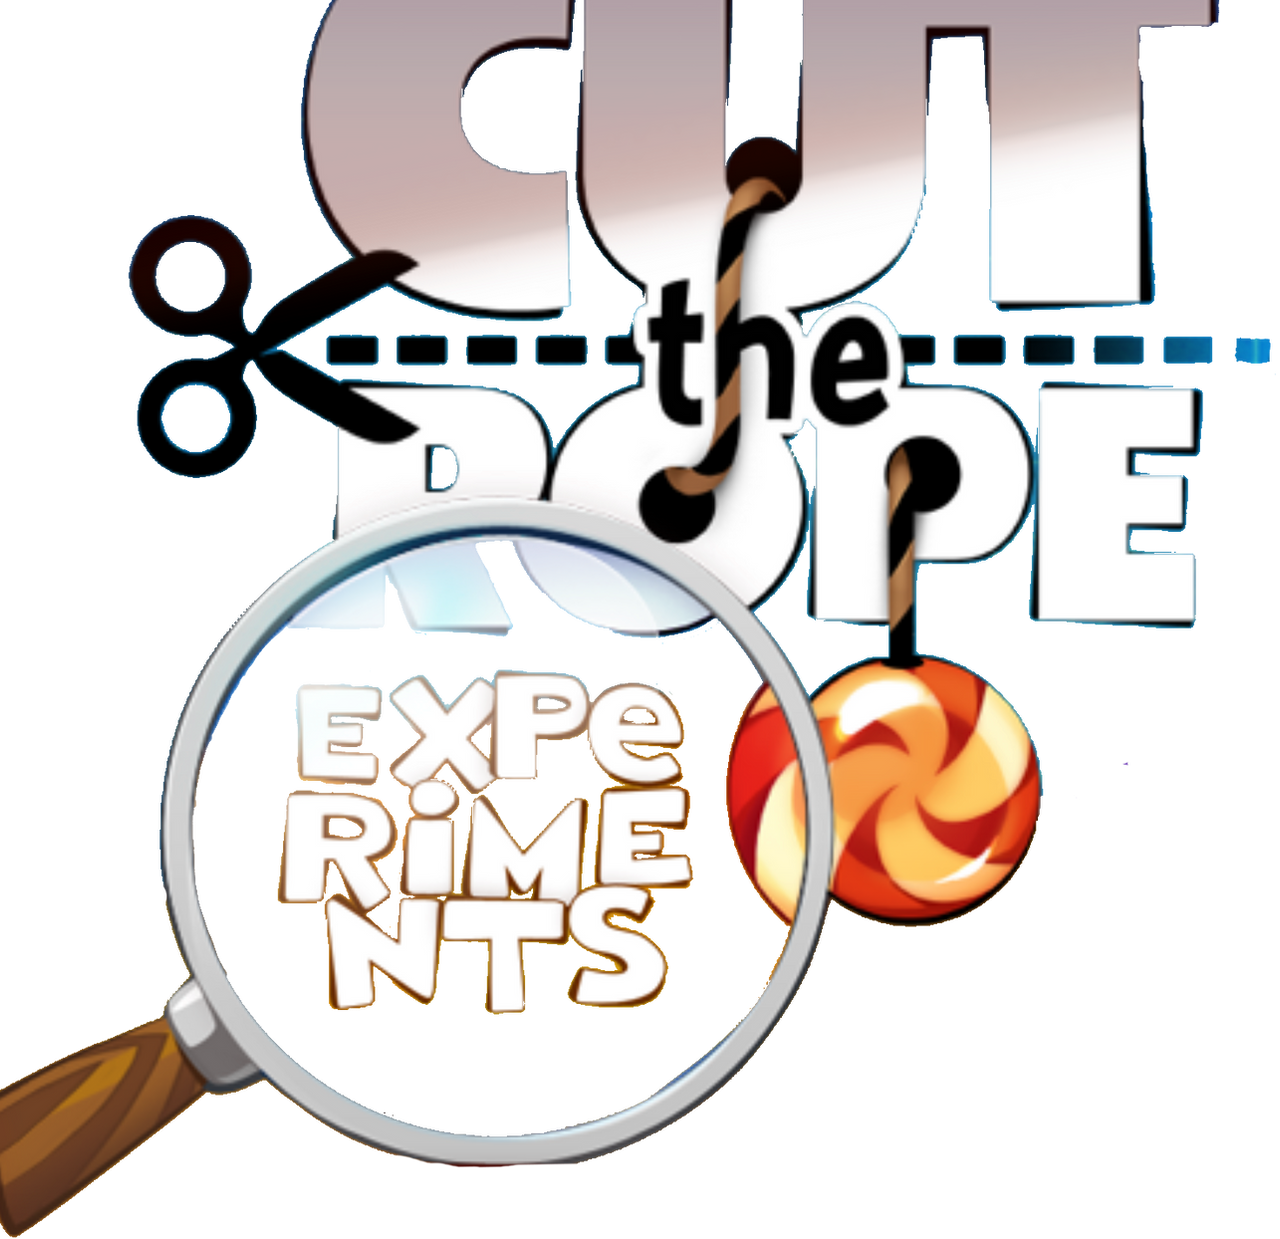 » 'Cut the Rope: Experiments' Description